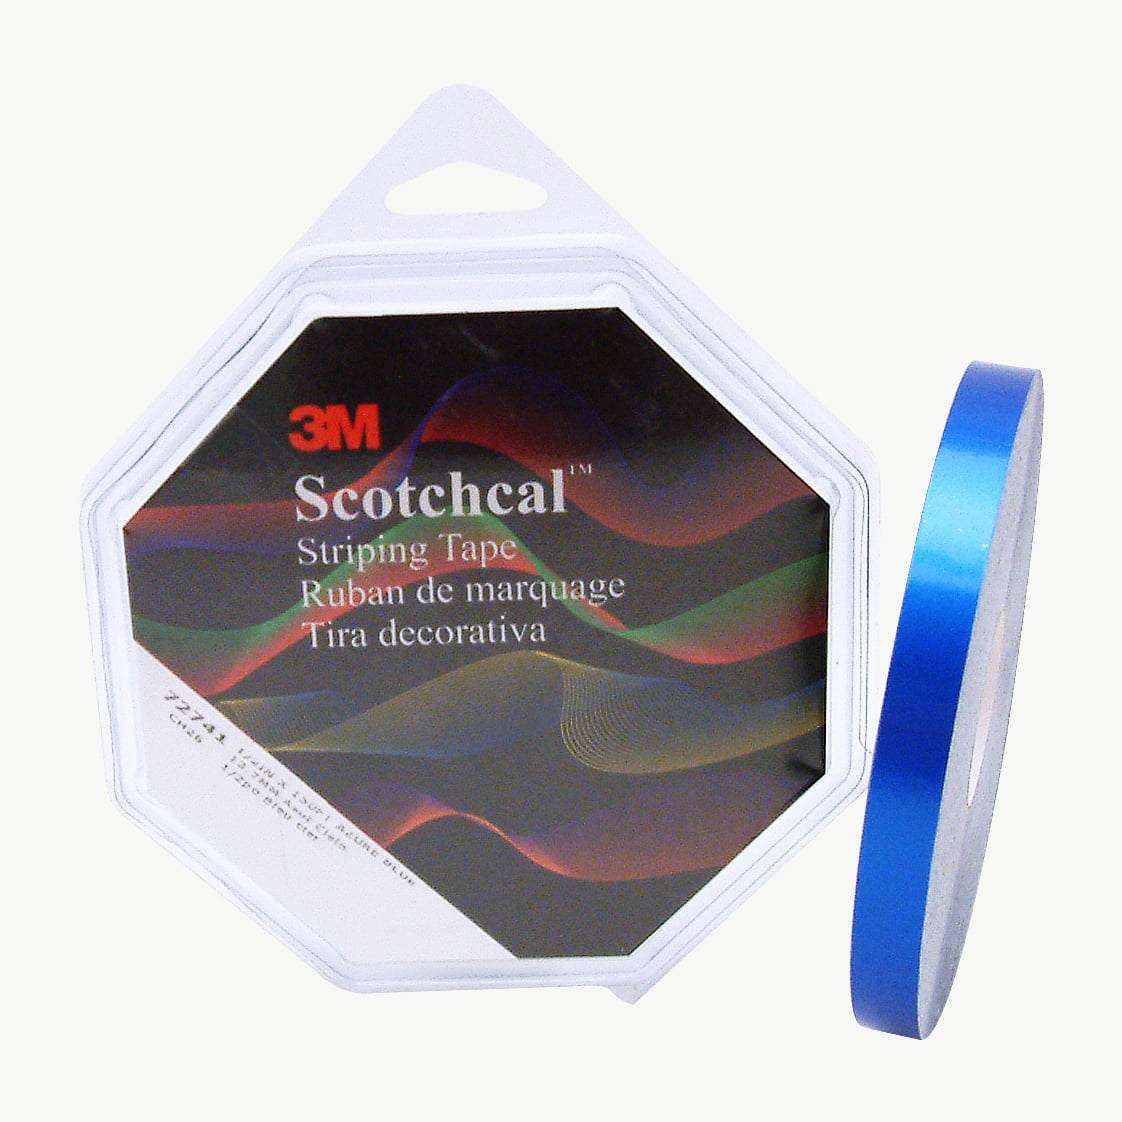 3M Scotchcal Striping Tape: 1 in. x 50 yds. (Gold Metallic)